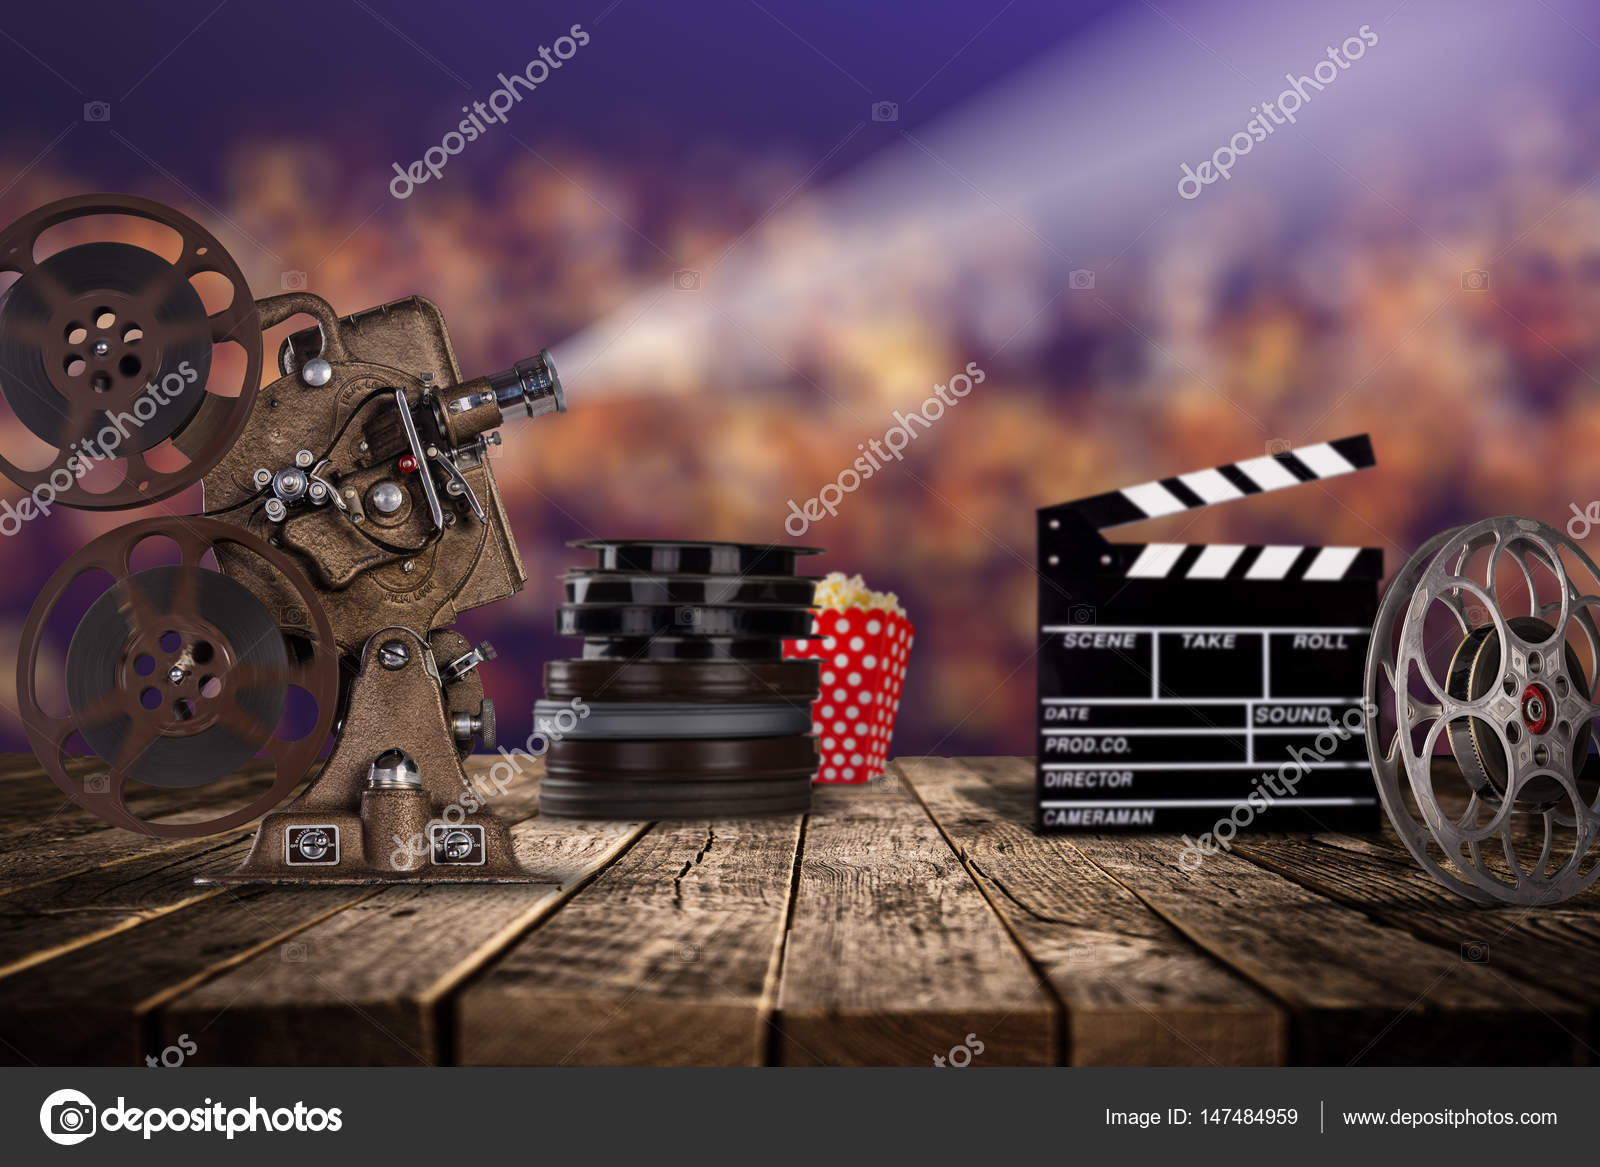 https://st3.depositphotos.com/1020618/14748/i/1600/depositphotos_147484959-stock-photo-cinema-concept-of-vintage-film.jpg